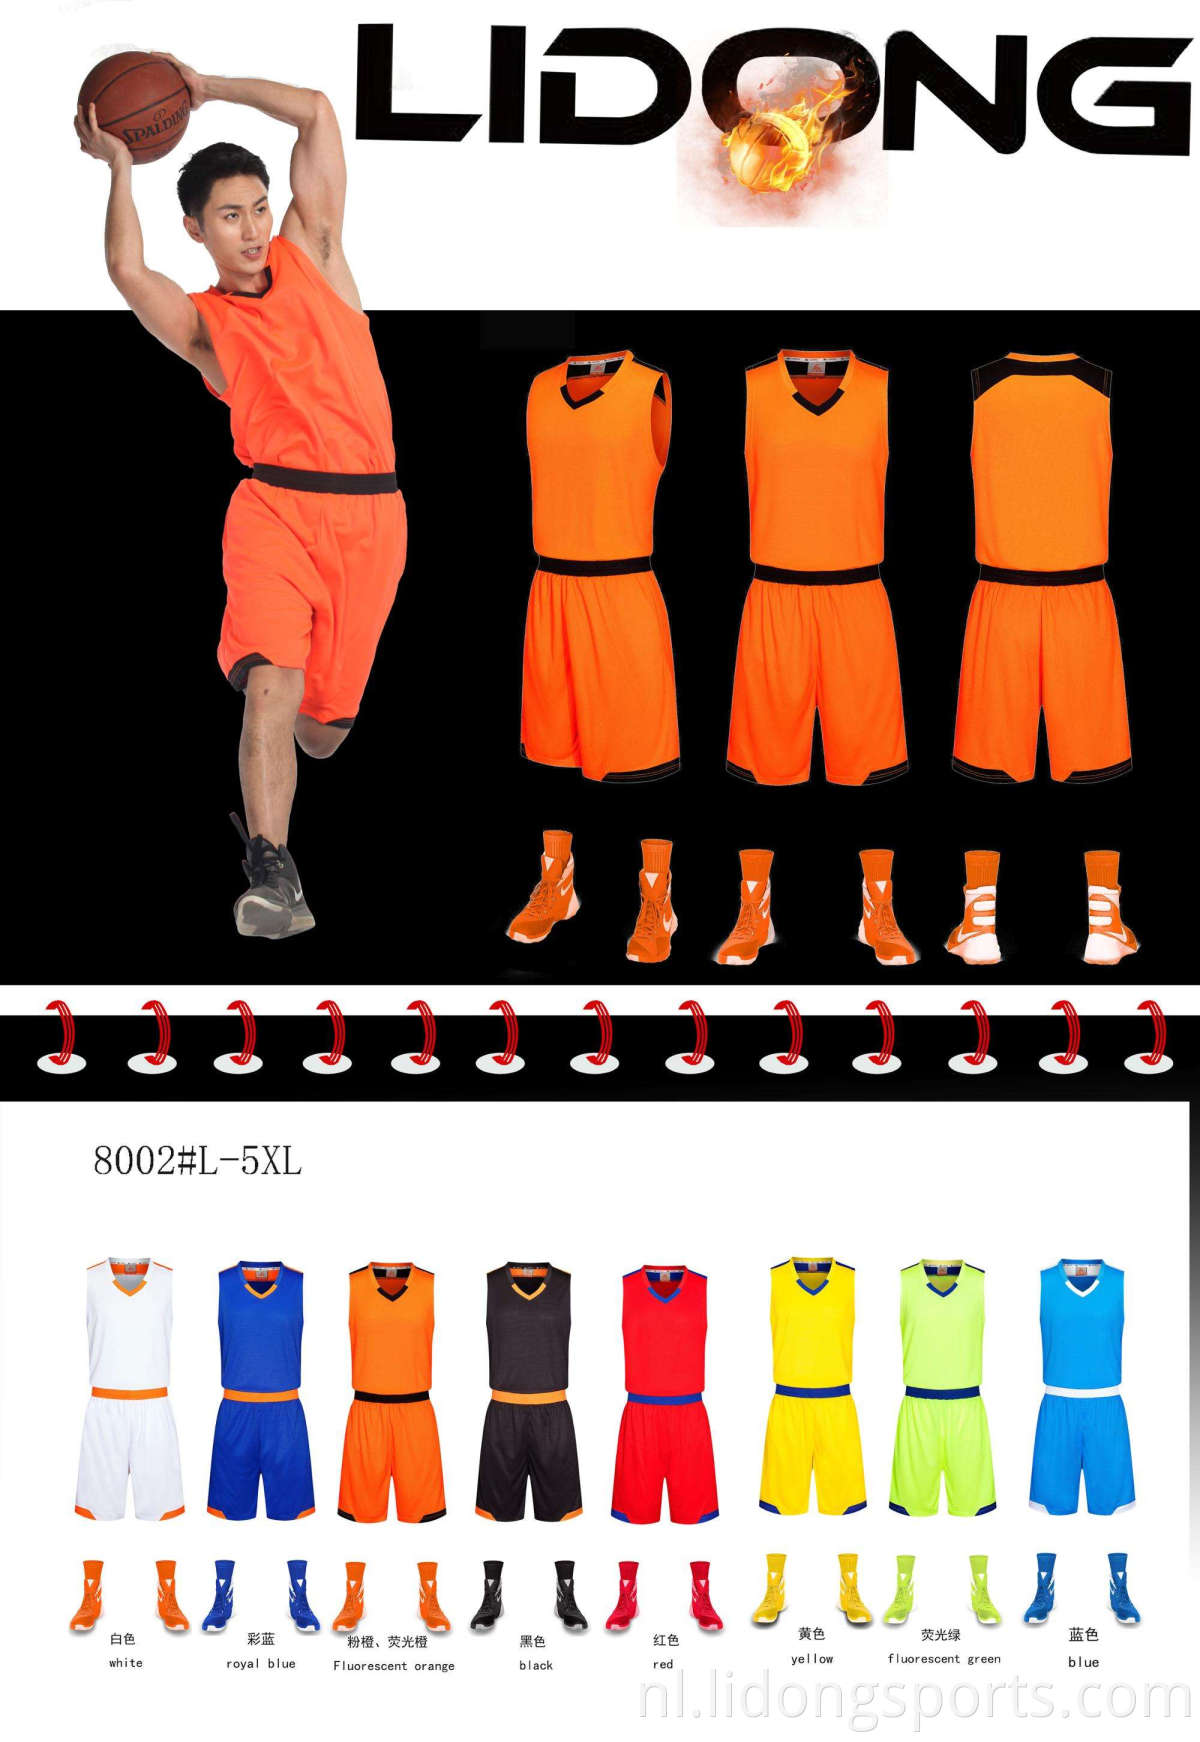 basketbal jersey uniform ontwerp kleur rood professioneel ontwerp basketbal uniform